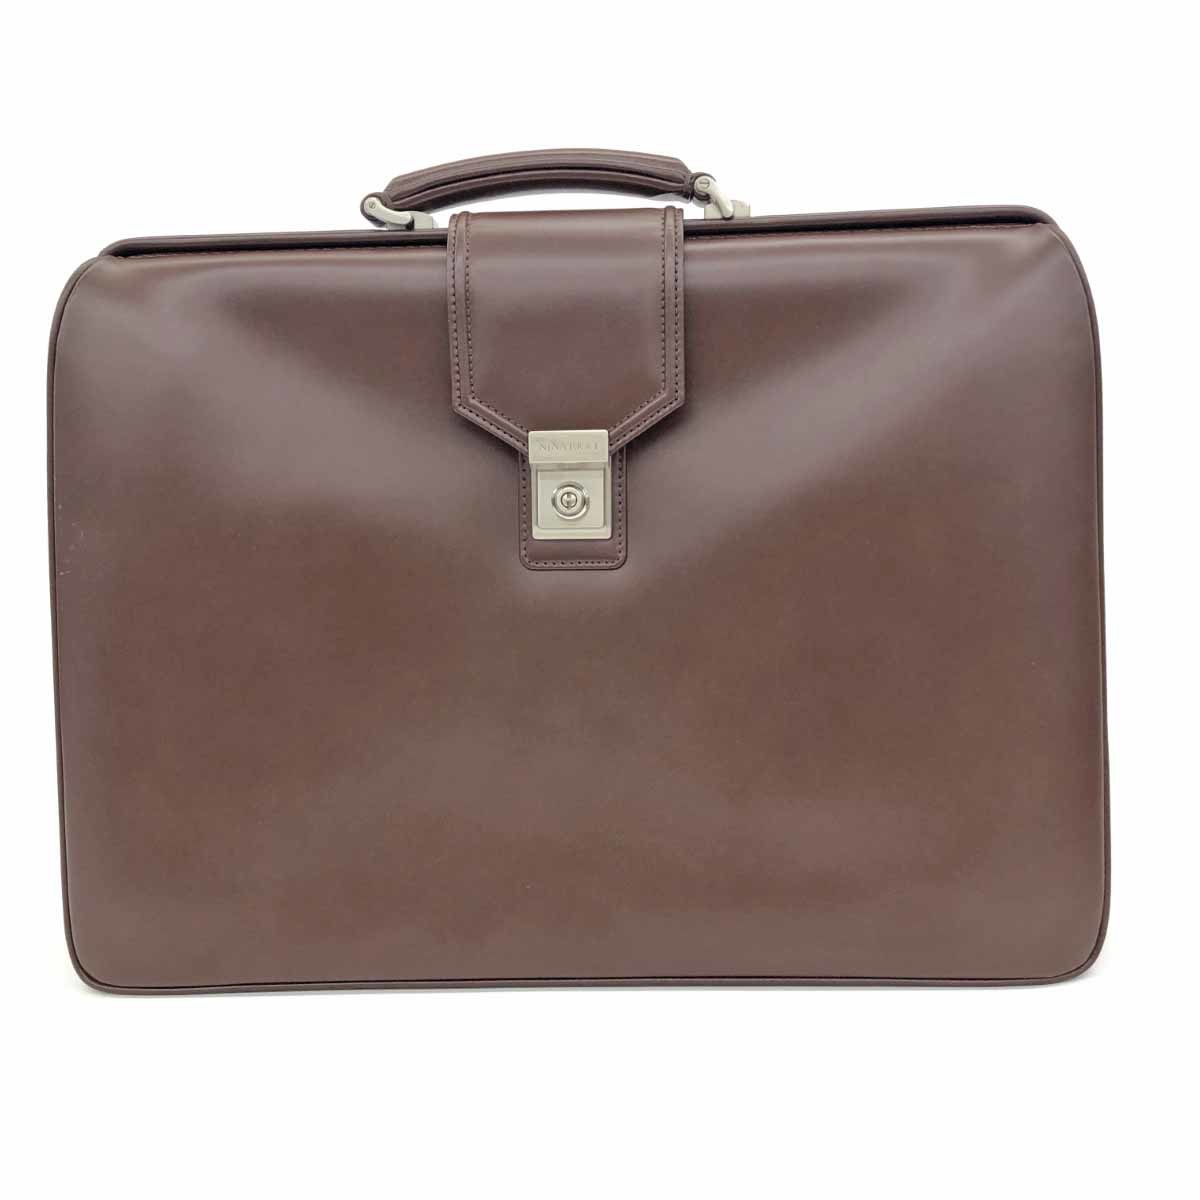 ◆NINA RICCI ニナリッチ ビジネスバッグ◆ ブラウン メンズ ブリーフケース bag 書類鞄 A4 TANIZAWA